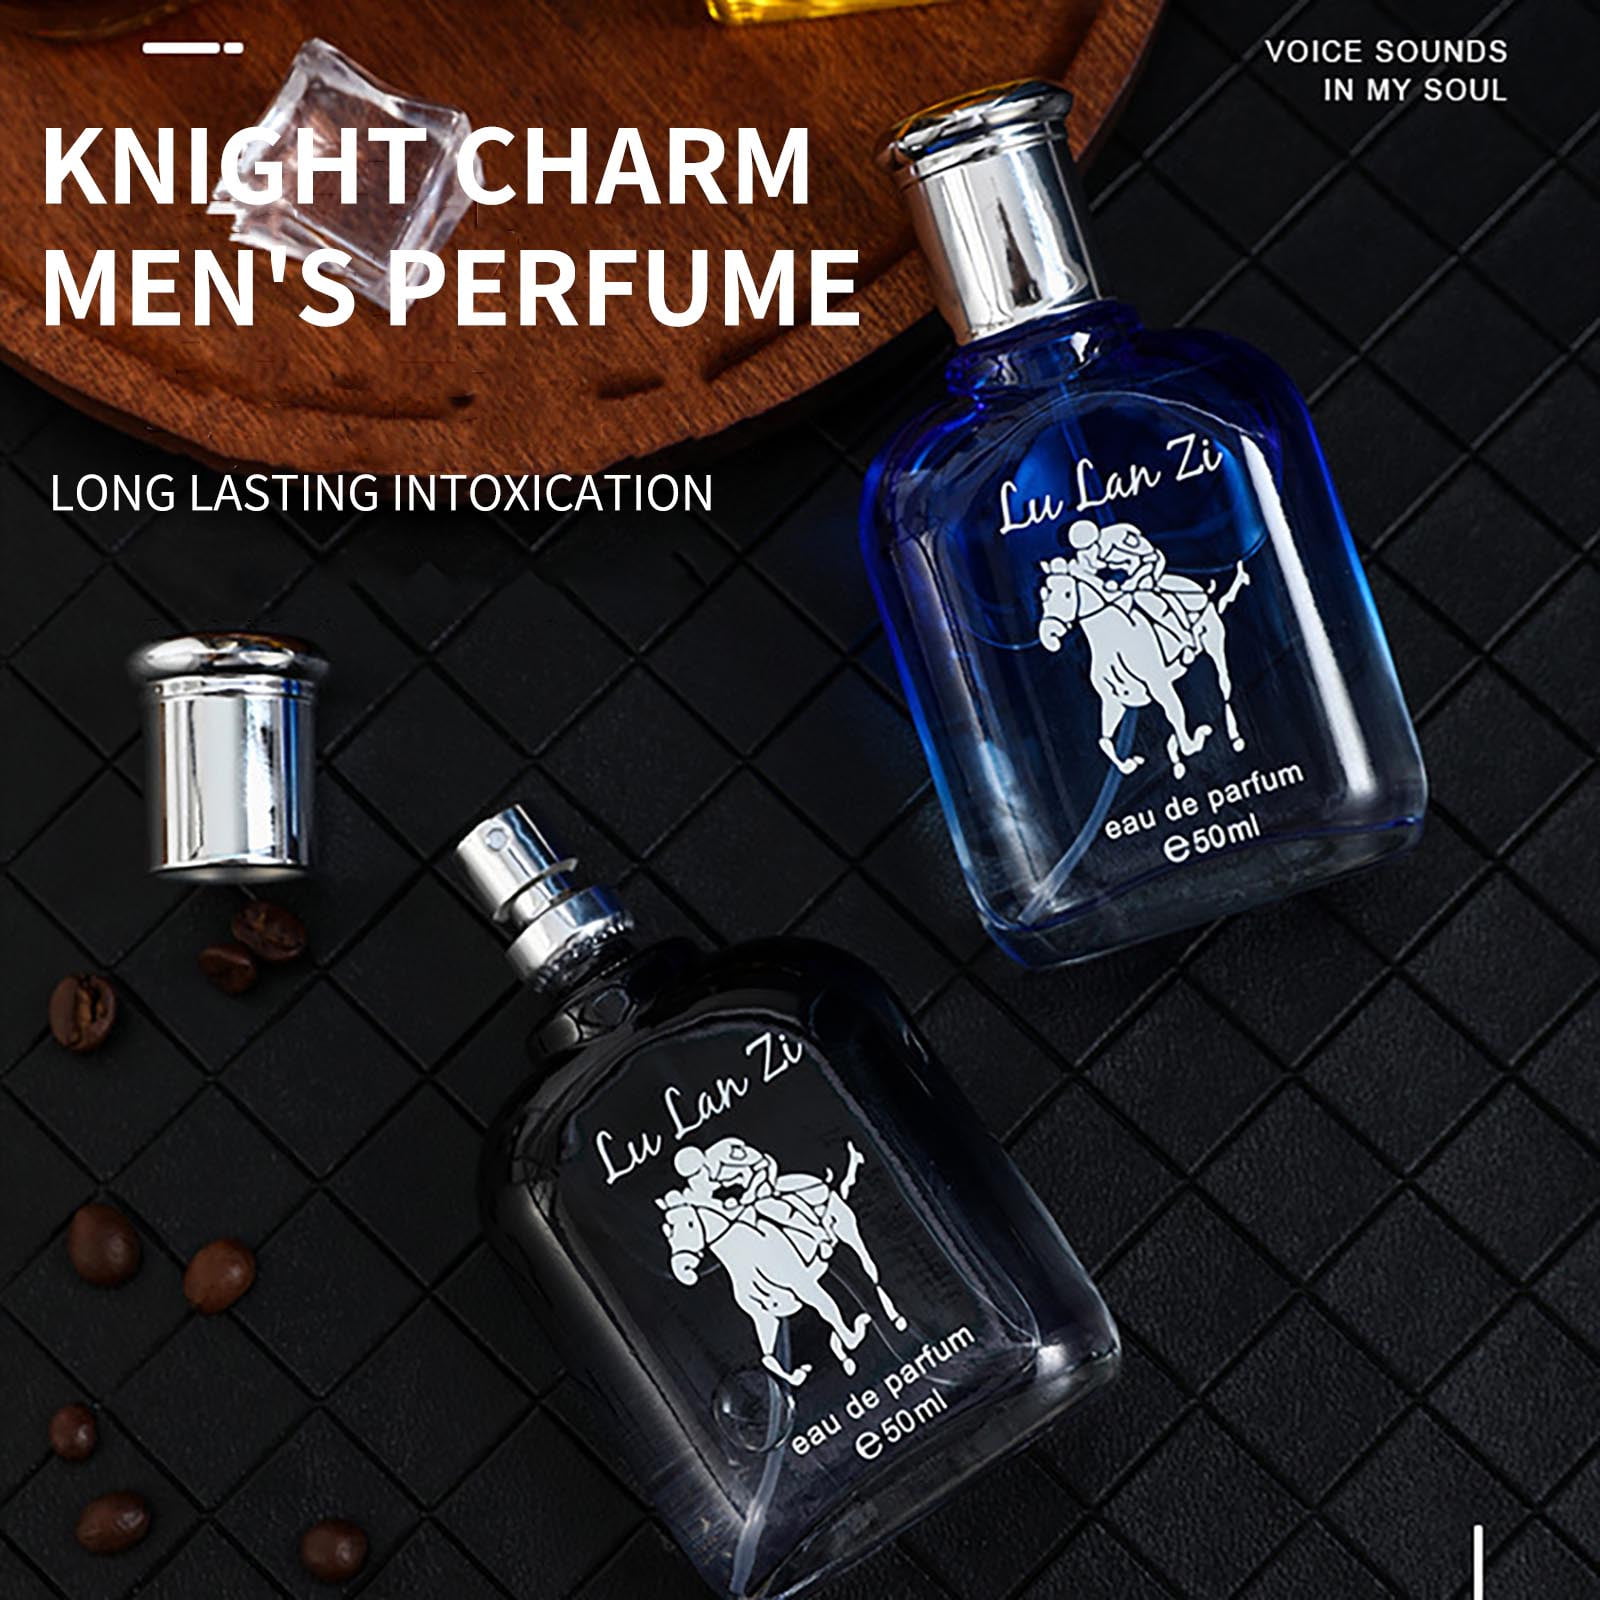  SUMDUINO Golden Lure Perfume Lure Her Perfume, Romantic Perfume  Attract Men Women Cologne Perfume Spray 50 ml (3PCS) : Beauty & Personal  Care